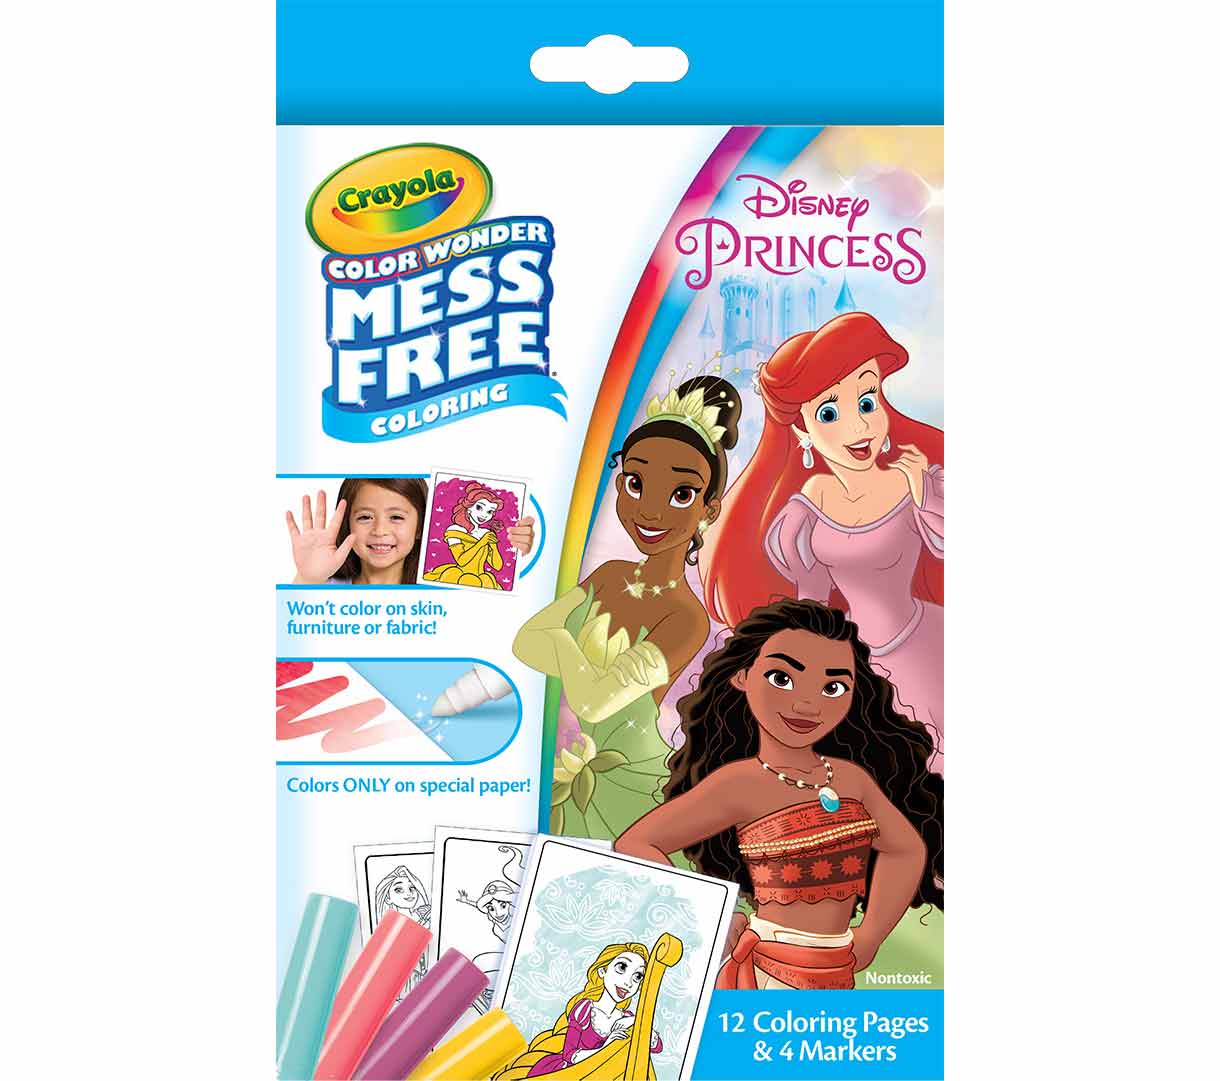 Color Wonder Mess Free Disney Princess Coloring Set, Crayola.com